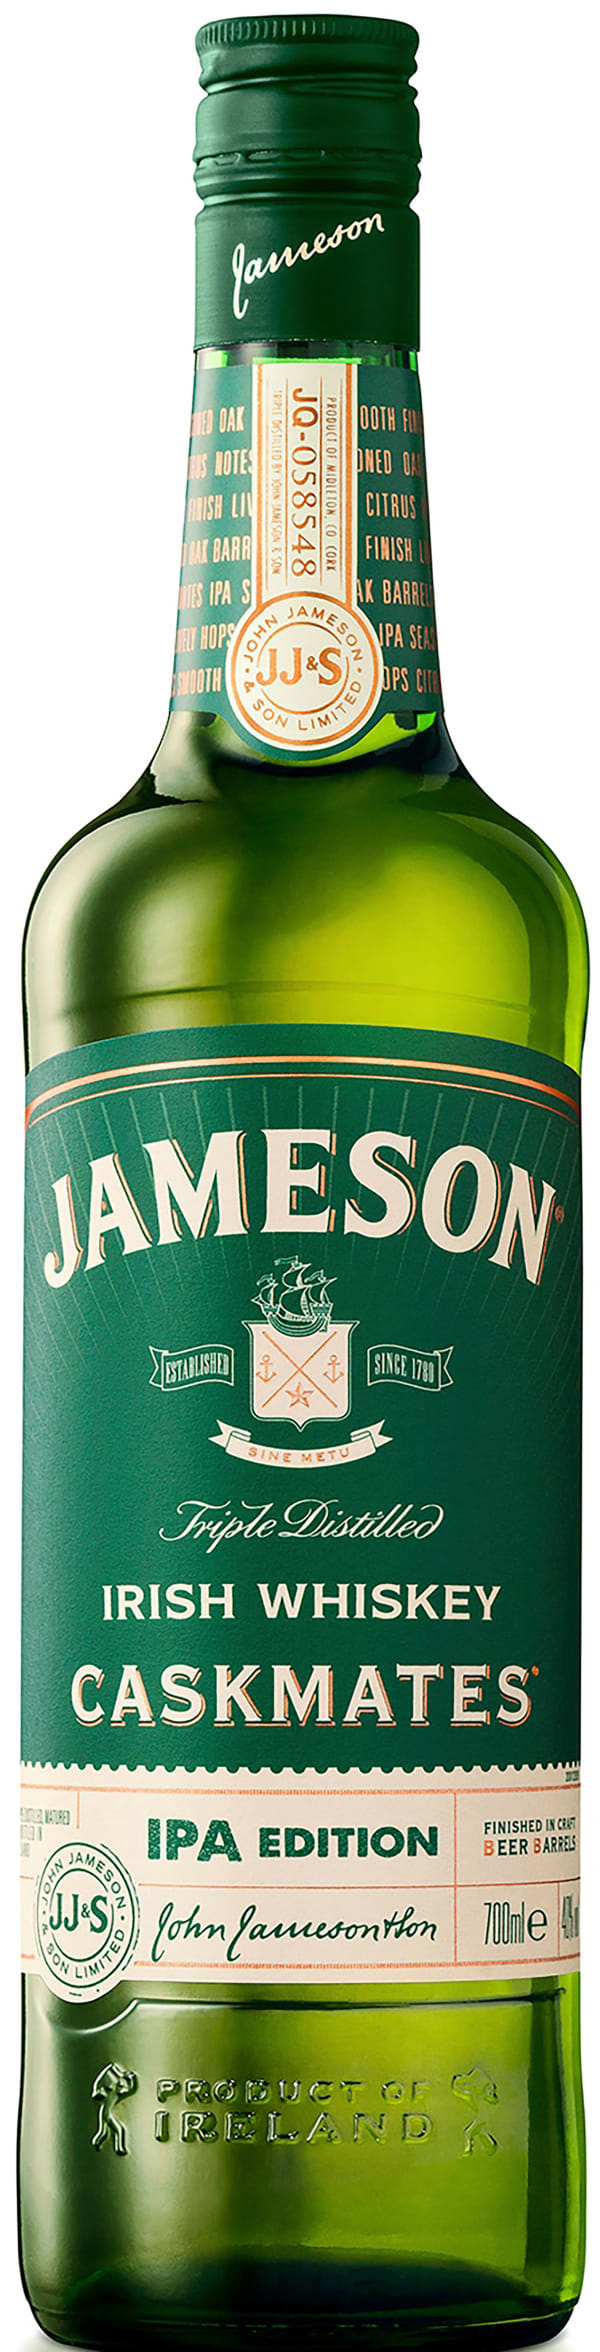 Caskmates IPA Edition Whisky Jameson 